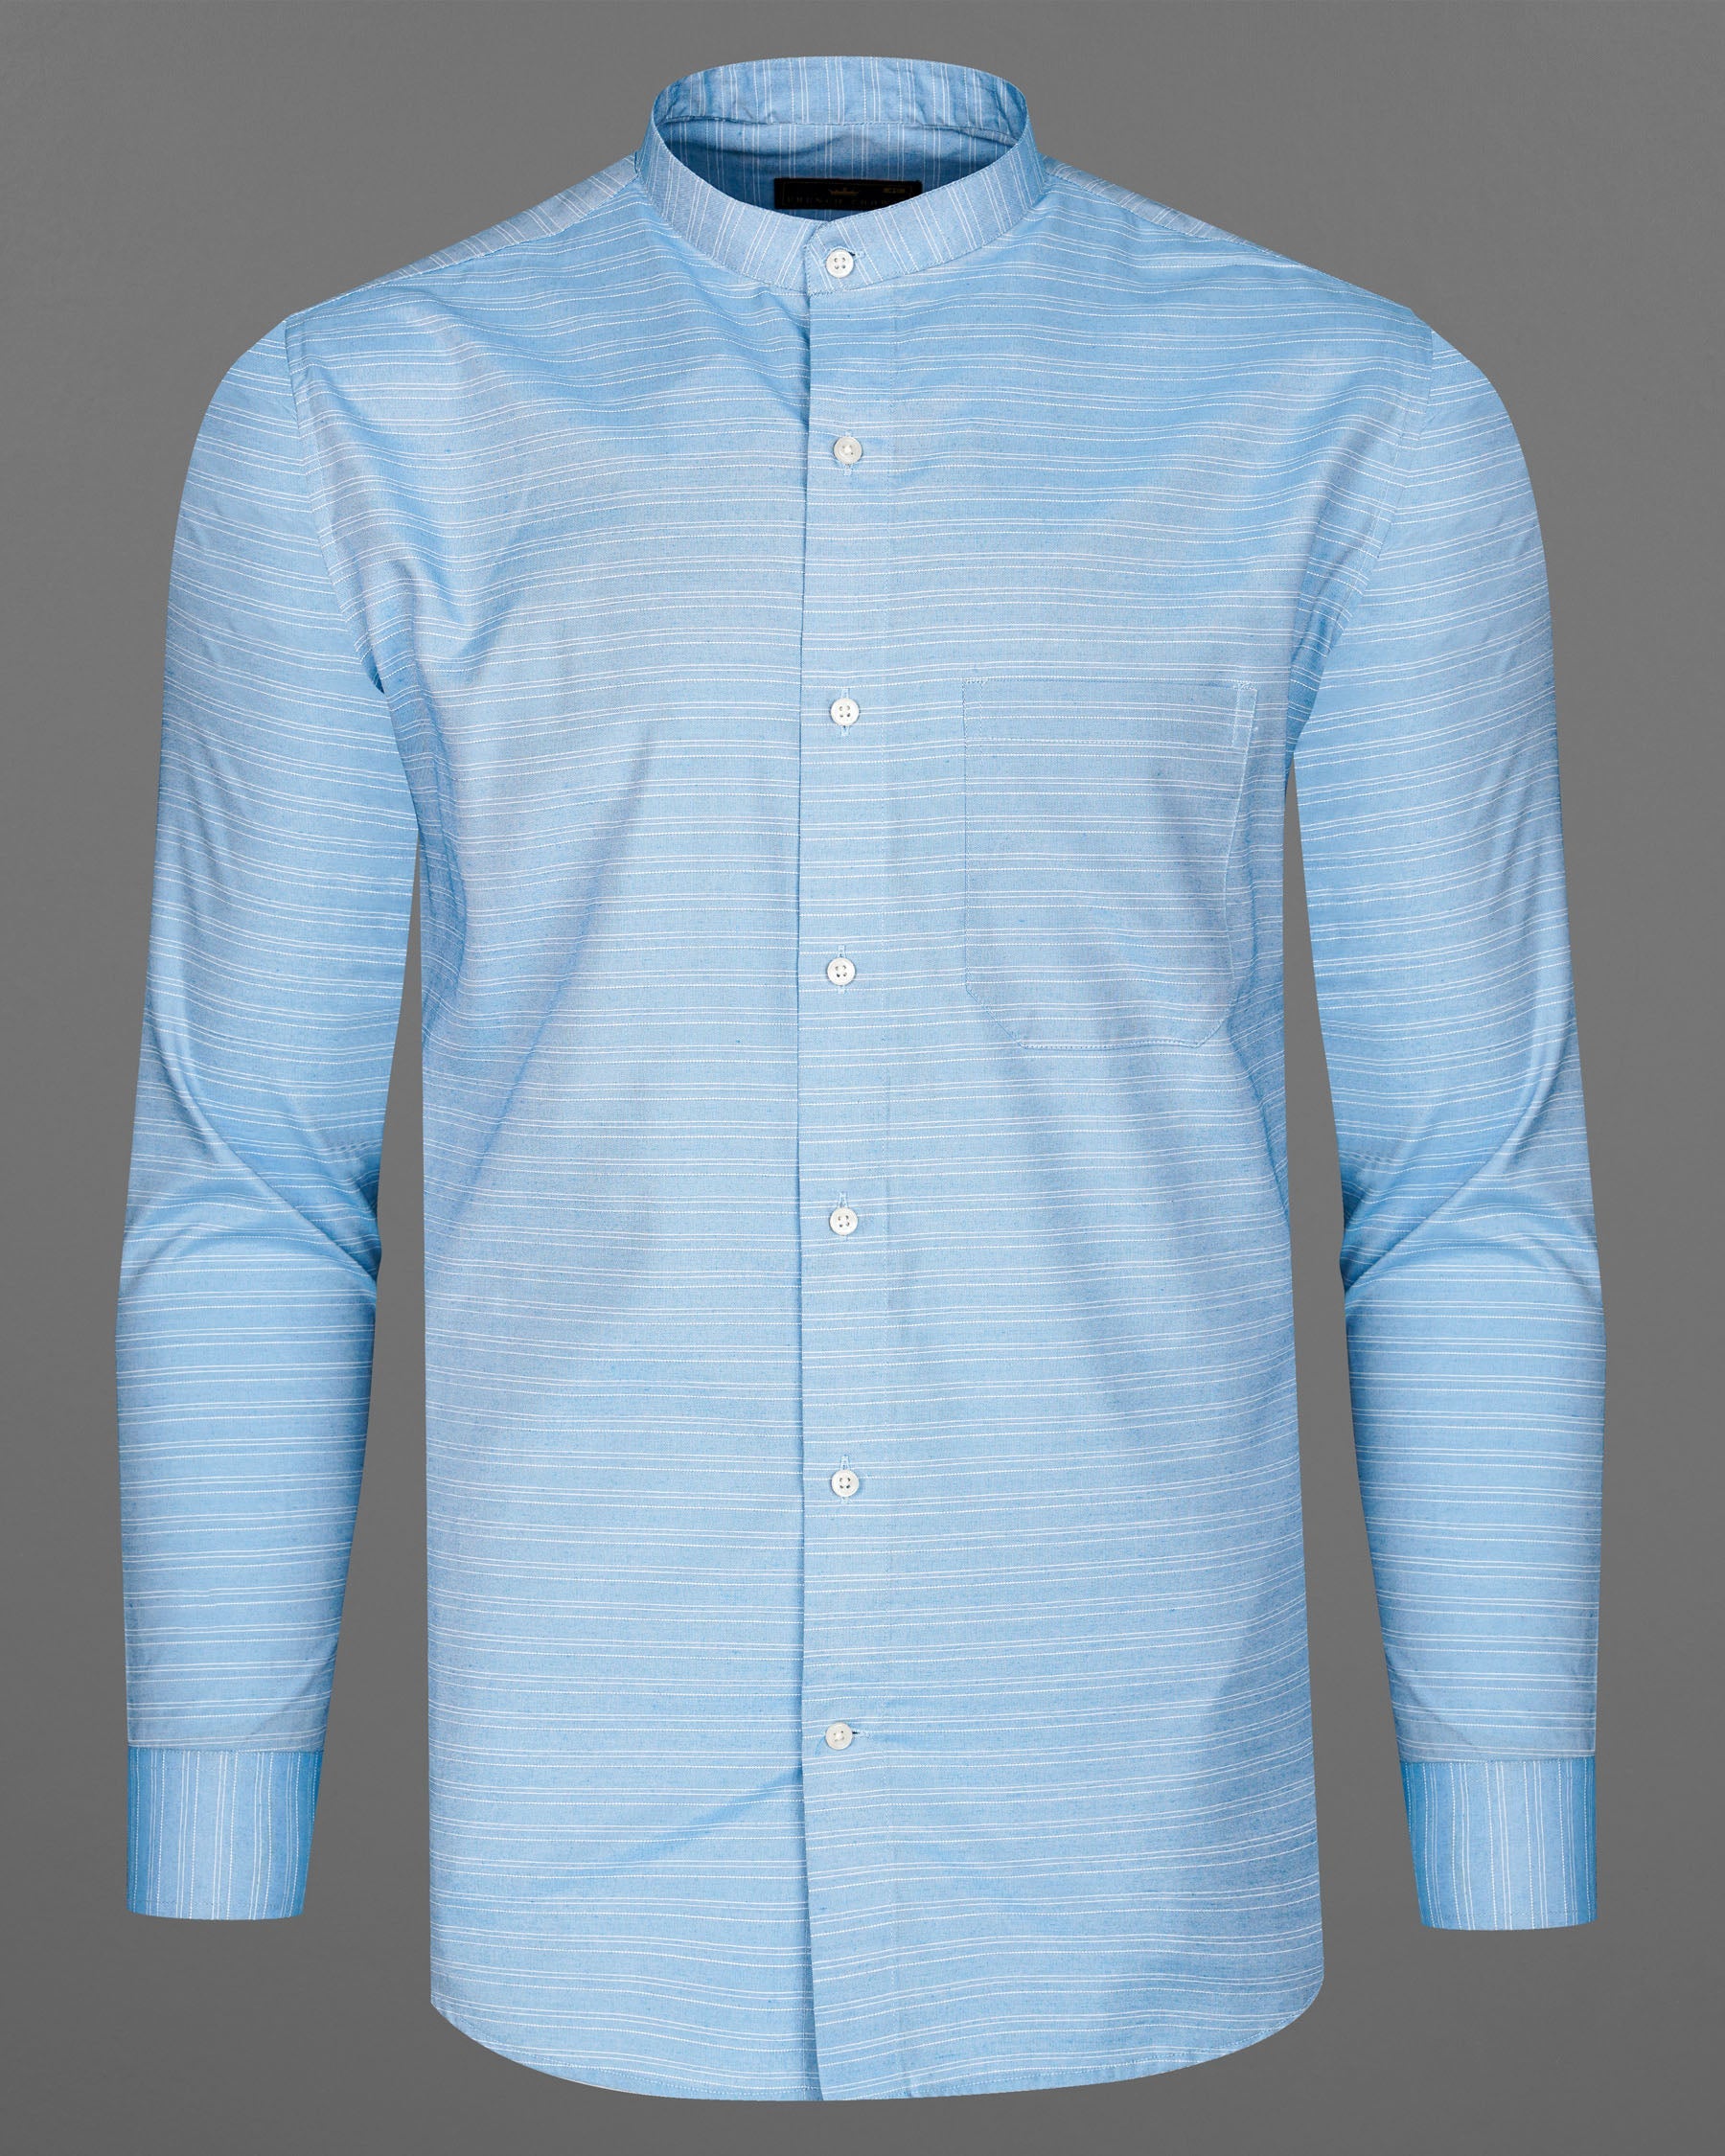 Pale Cerulean Blue With White Striped Dobby Textured Premium Giza Cotton Shirt 7911-M -38,7911-M -H-38,7911-M -39,7911-M -H-39,7911-M -40,7911-M -H-40,7911-M -42,7911-M -H-42,7911-M -44,7911-M -H-44,7911-M -46,7911-M -H-46,7911-M -48,7911-M -H-48,7911-M -50,7911-M -H-50,7911-M -52,7911-M -H-52